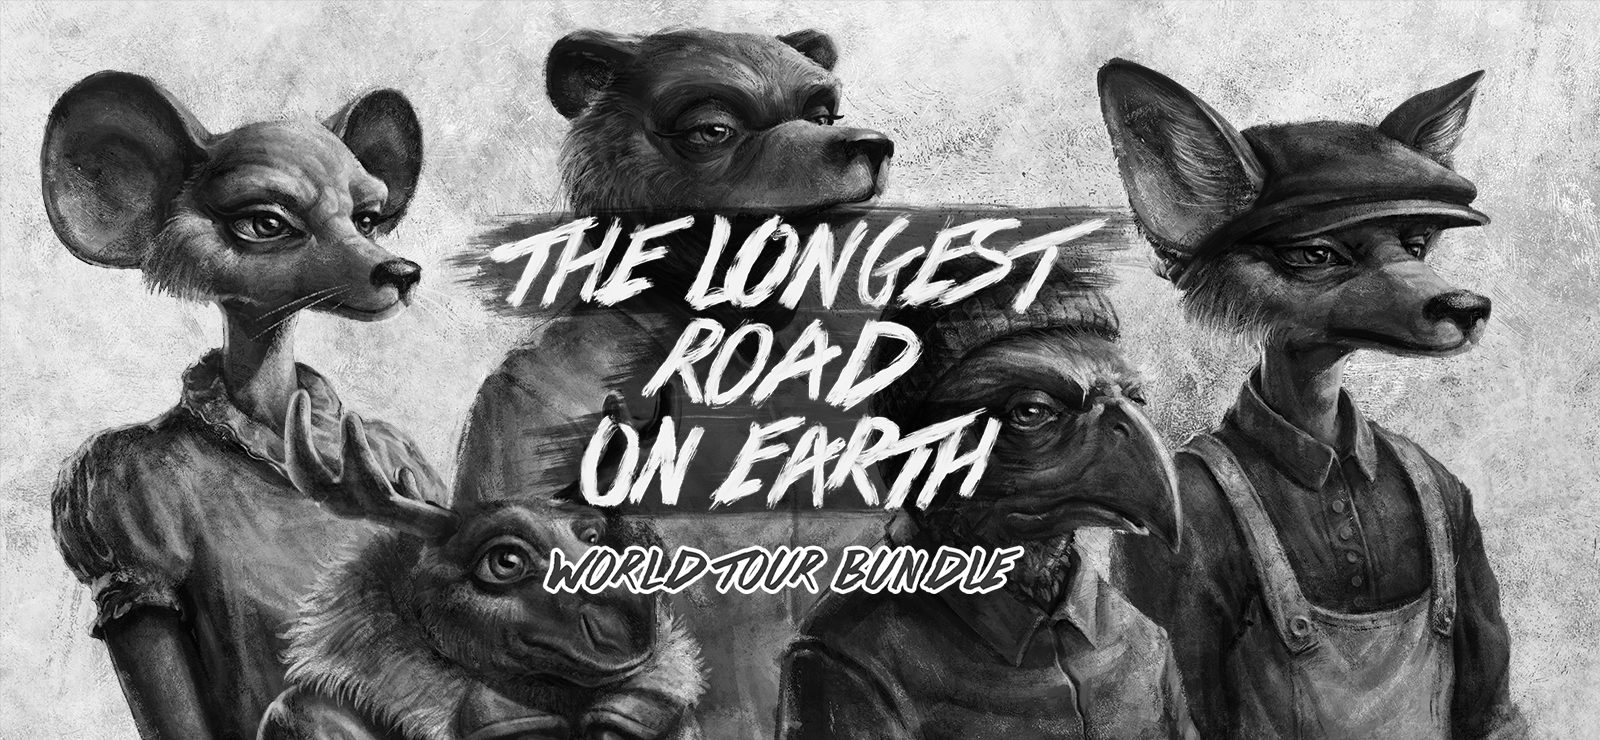 The Longest Road On Earth World Tour Bundle